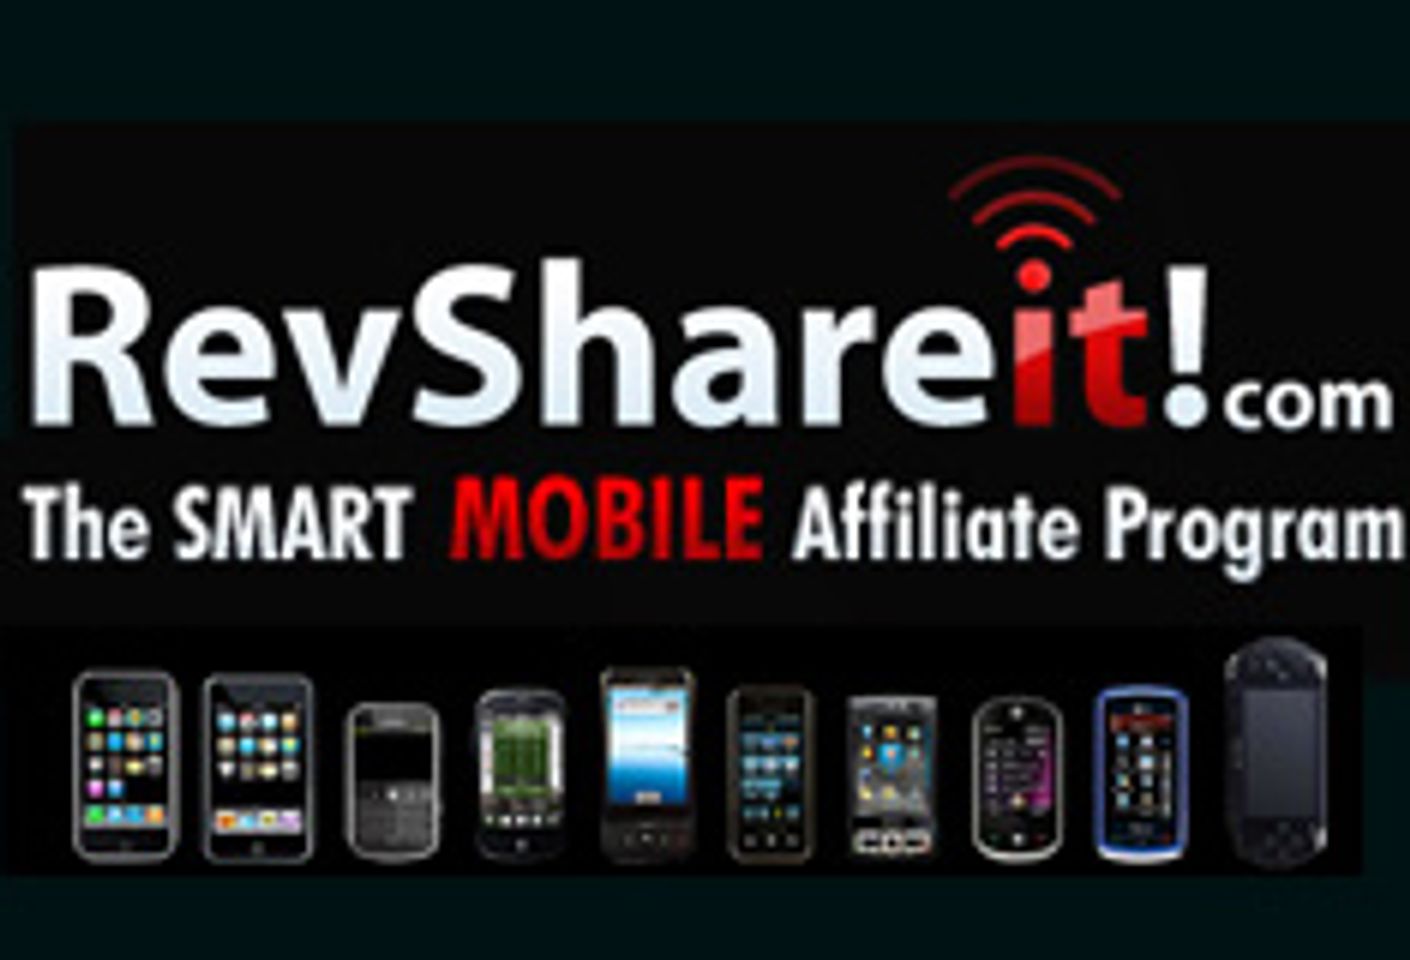 Mobile Sponsor RevShareit Raises Payouts